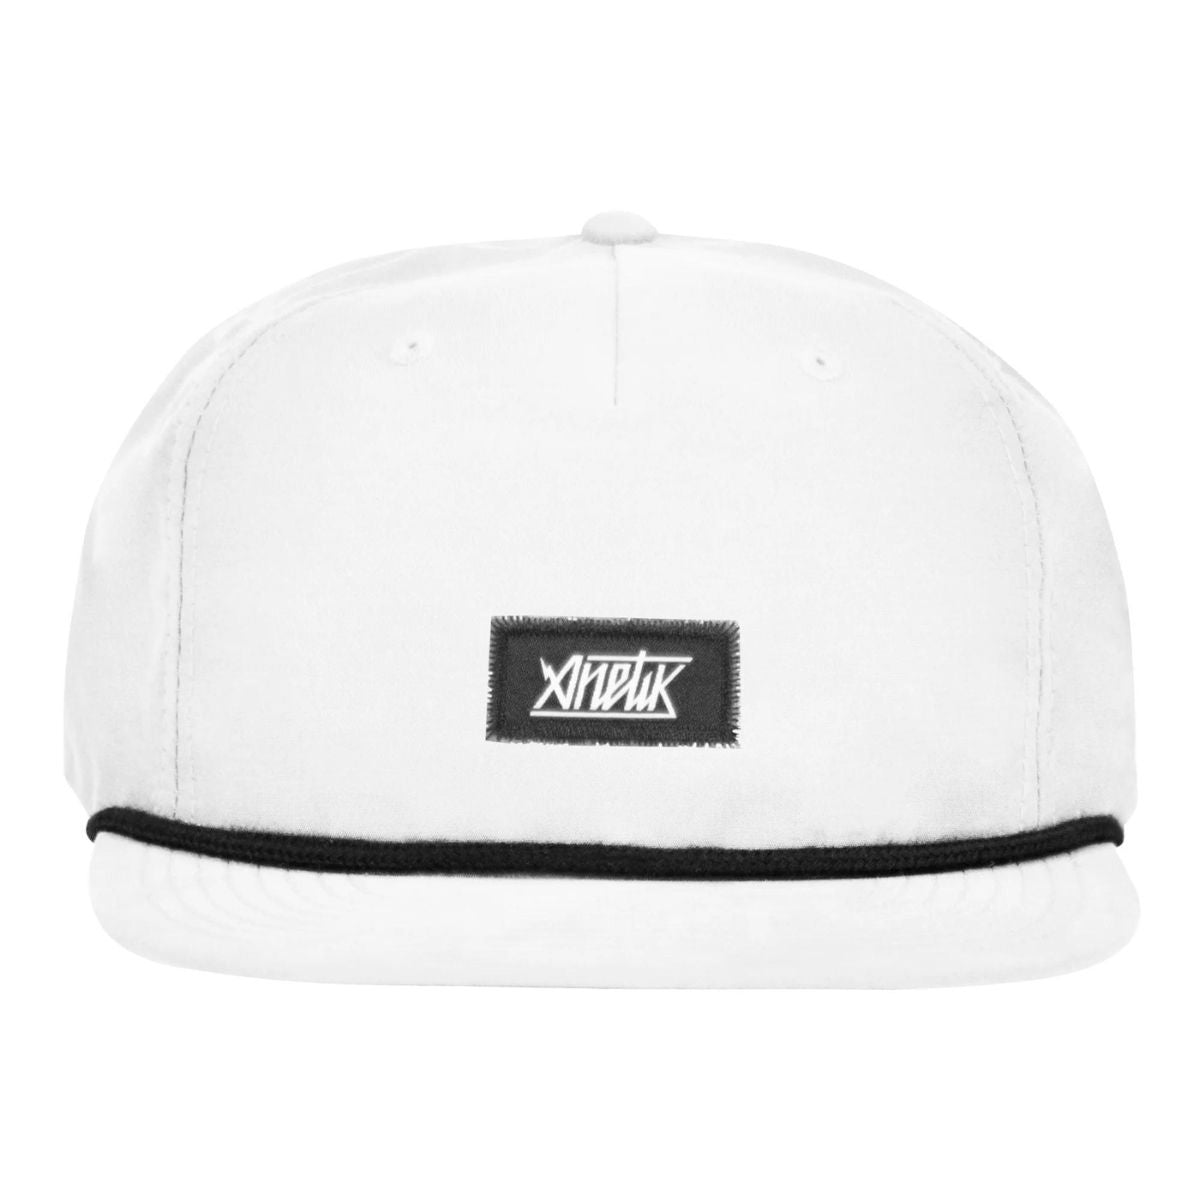 ANETIK Bolt Retro Trucker Hat in White - BoardCo